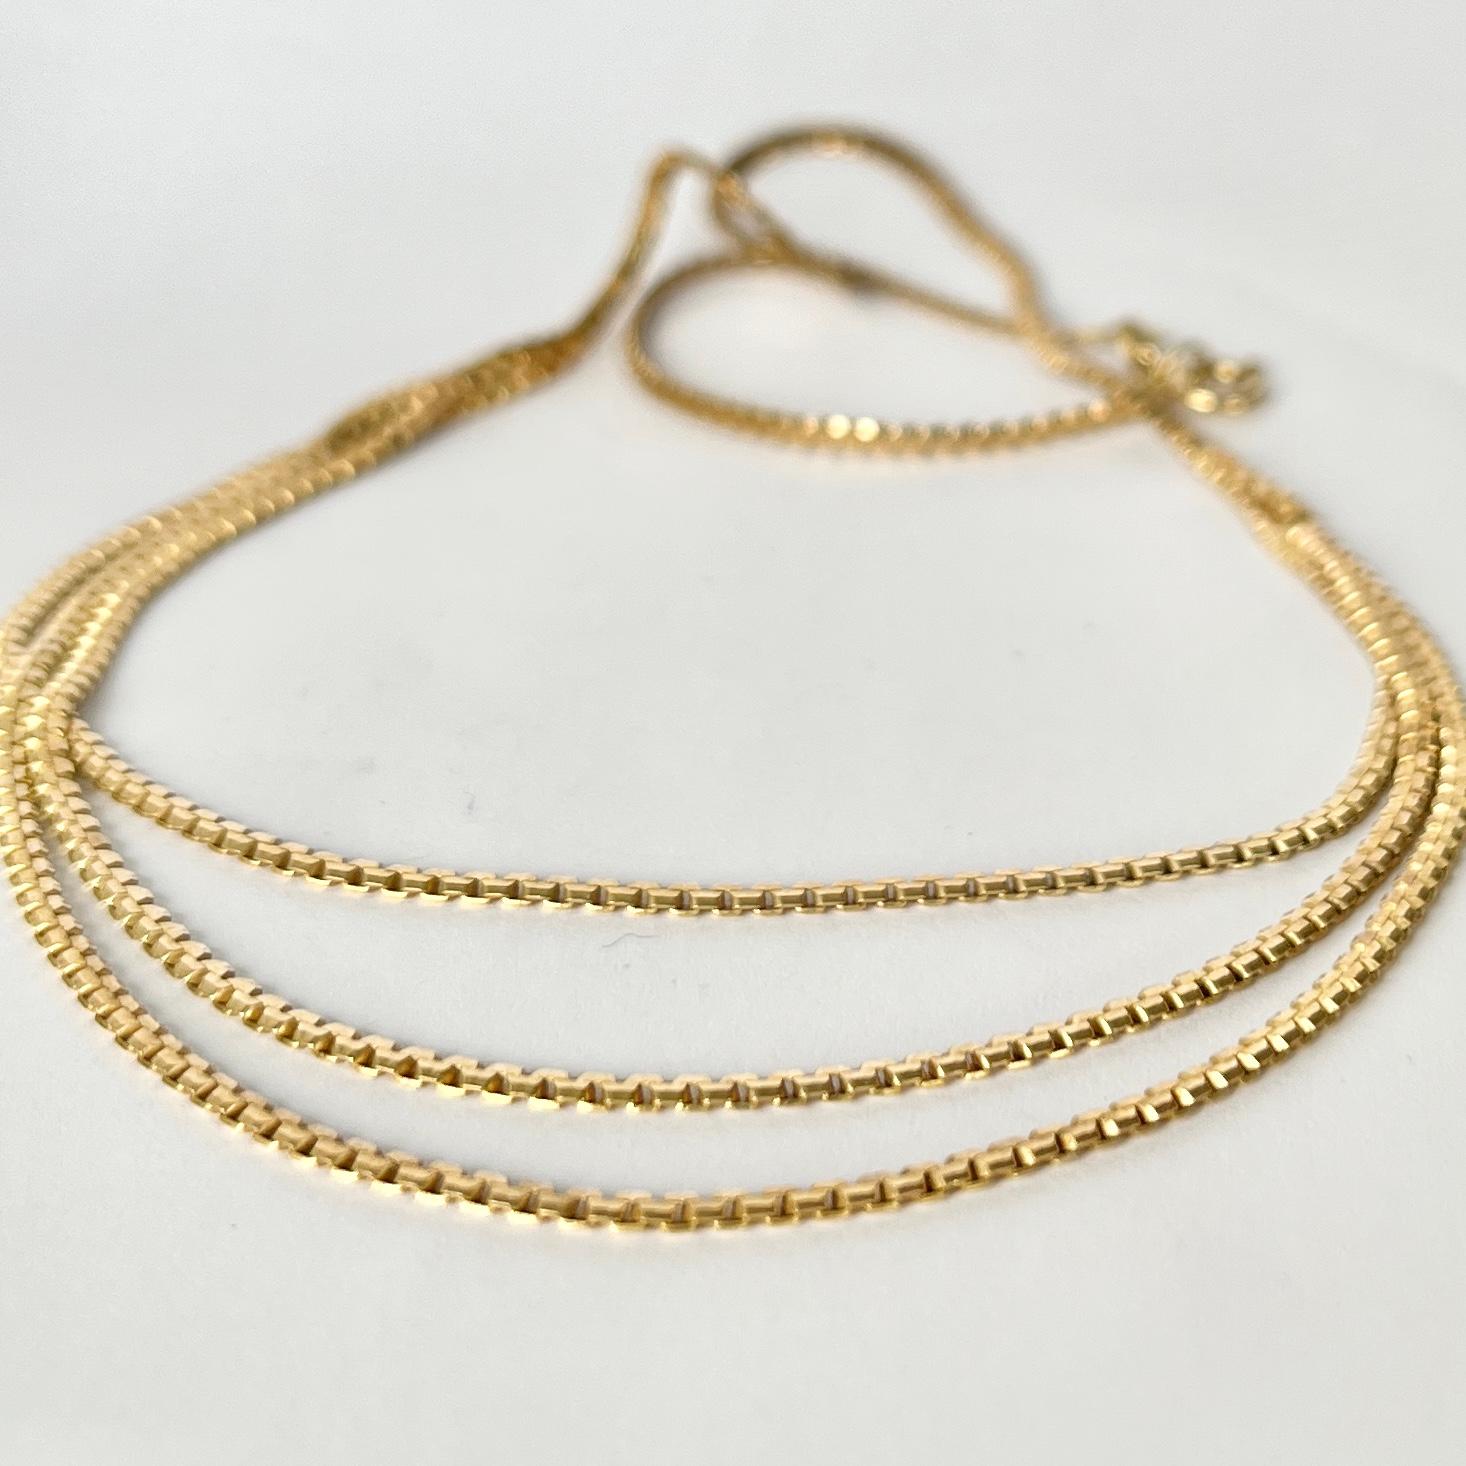 9 carat gold chain